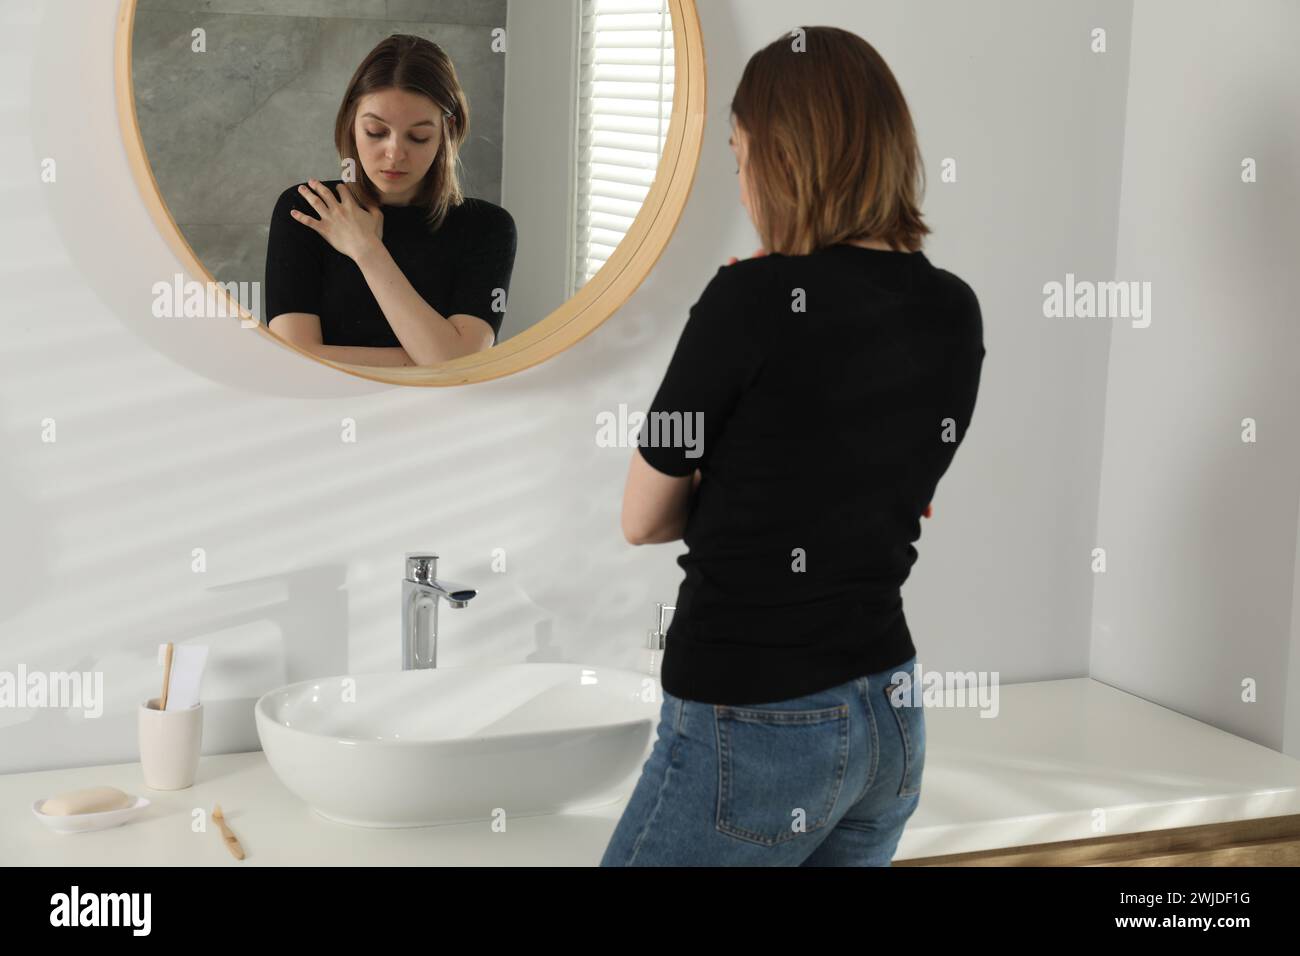 Sad young woman near mirror in bathroom Stock Photo